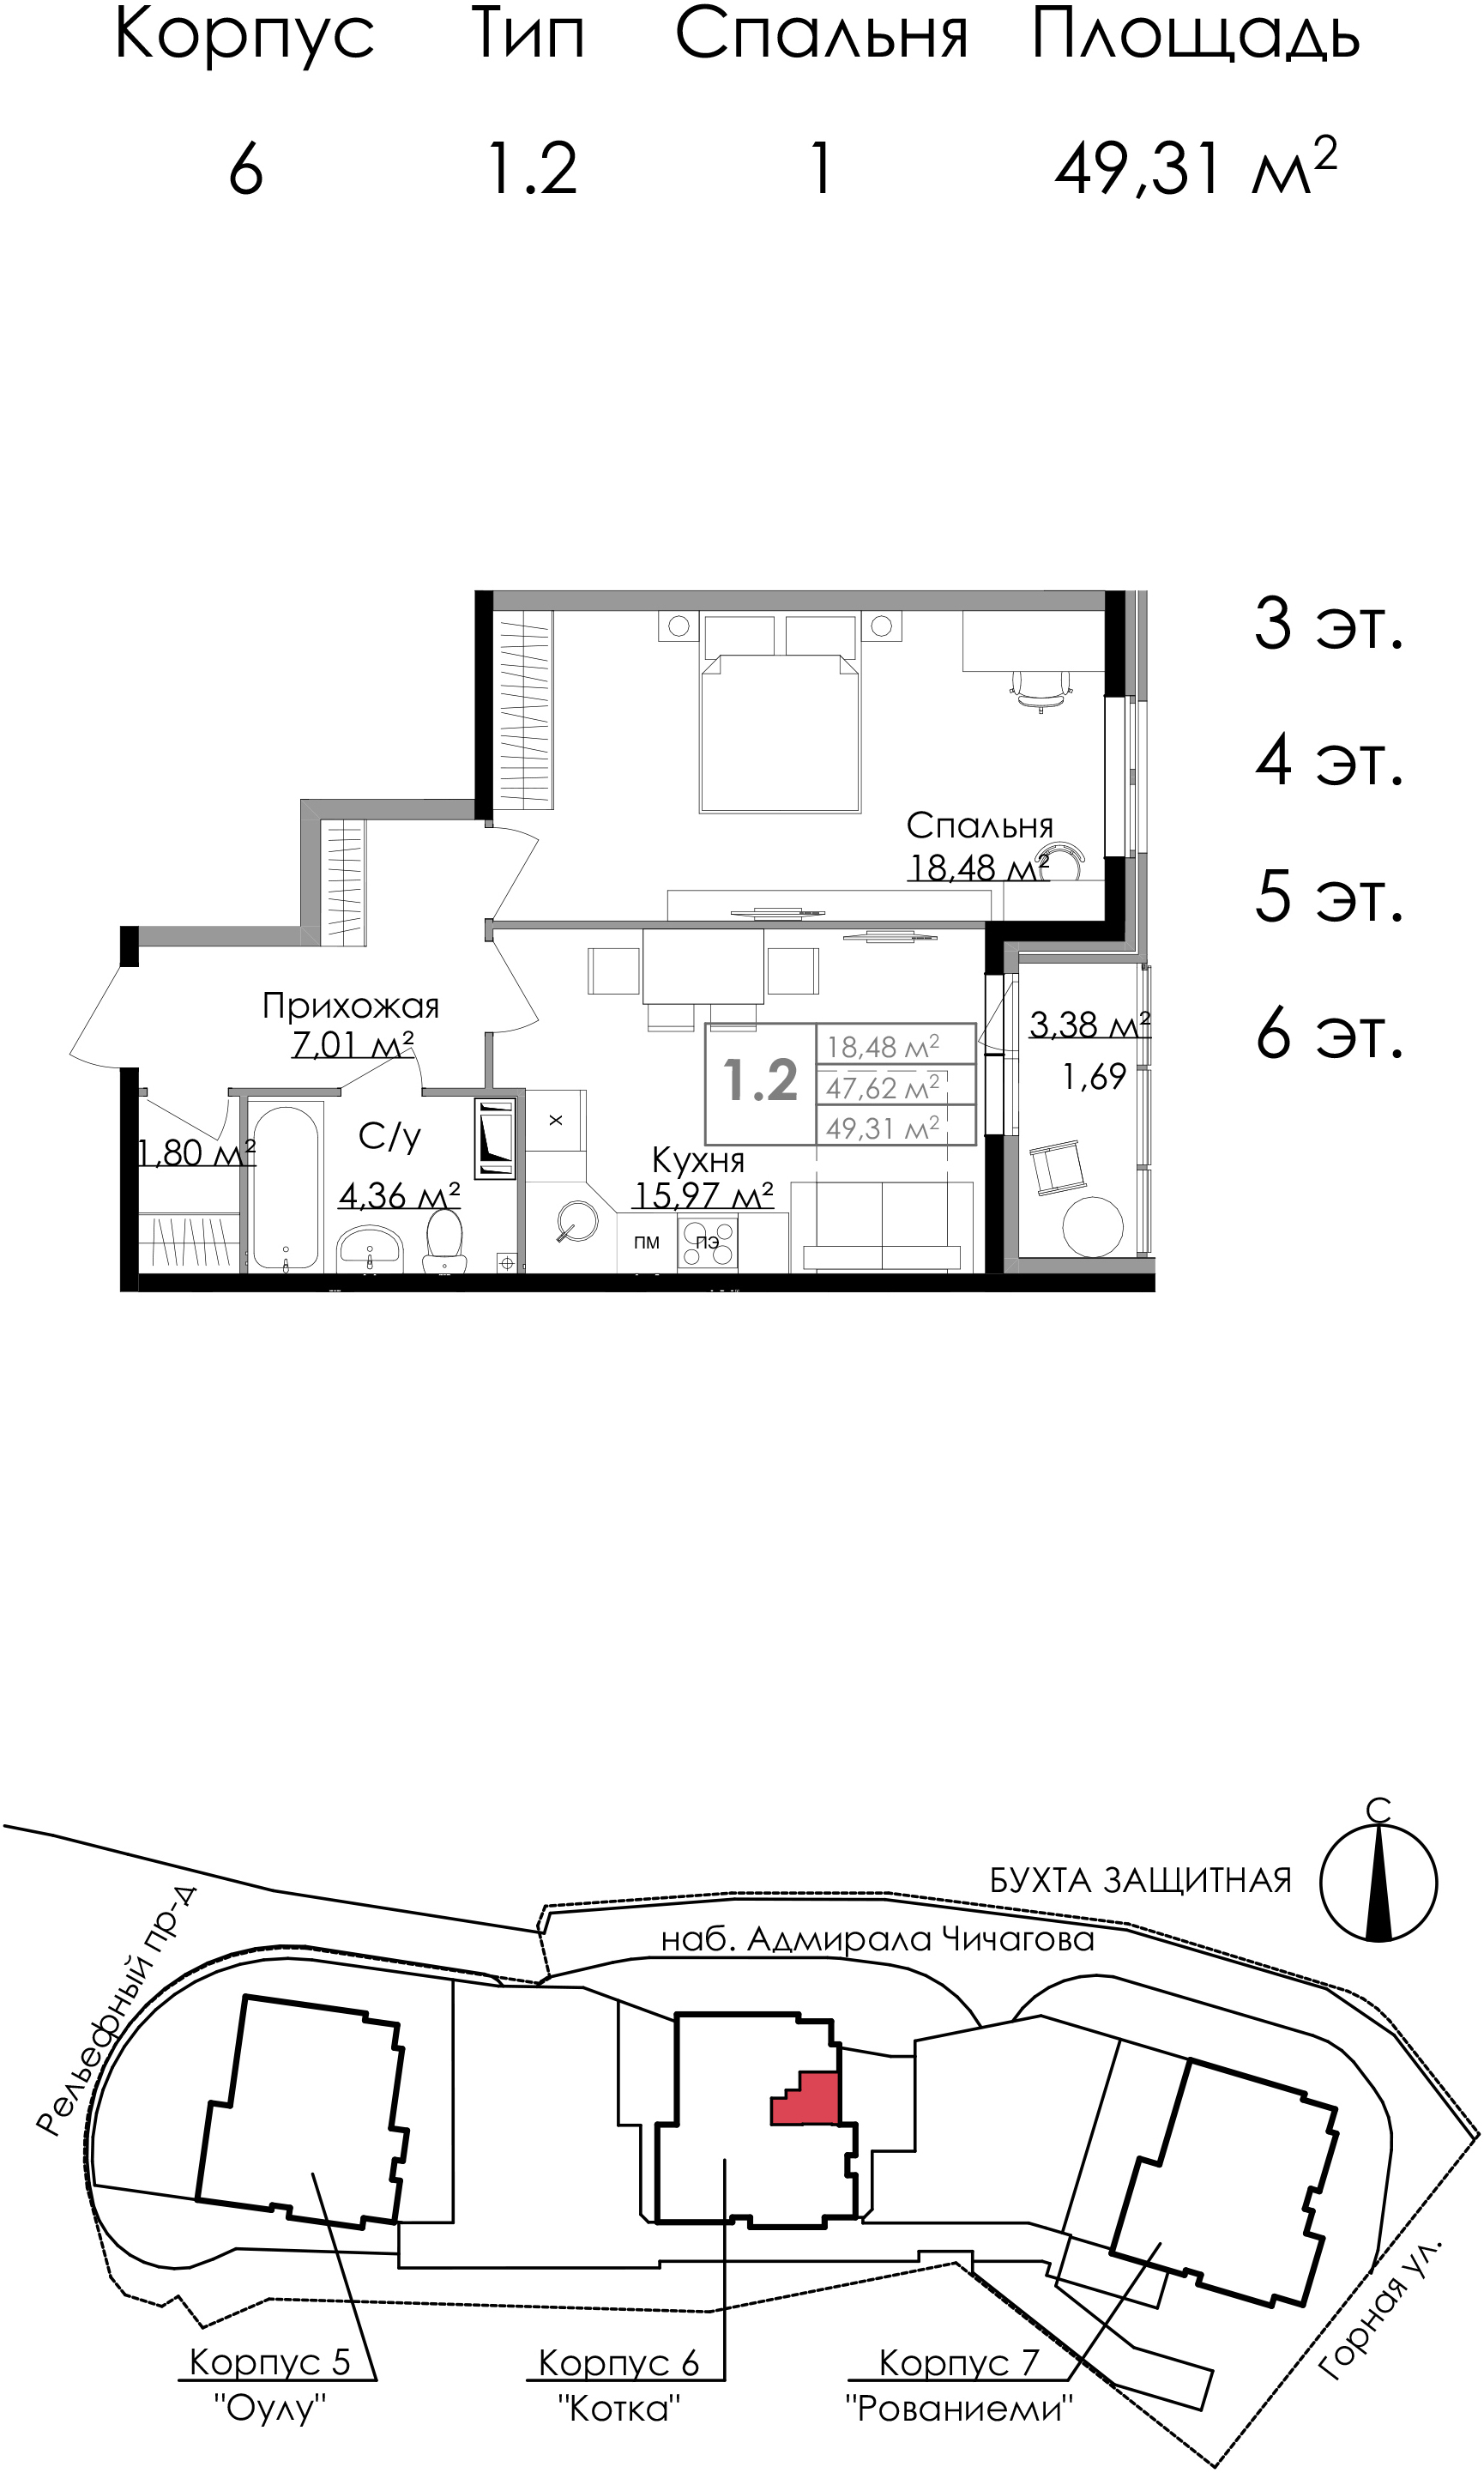 1 комн. квартира, 49.3 м², 3 этаж 